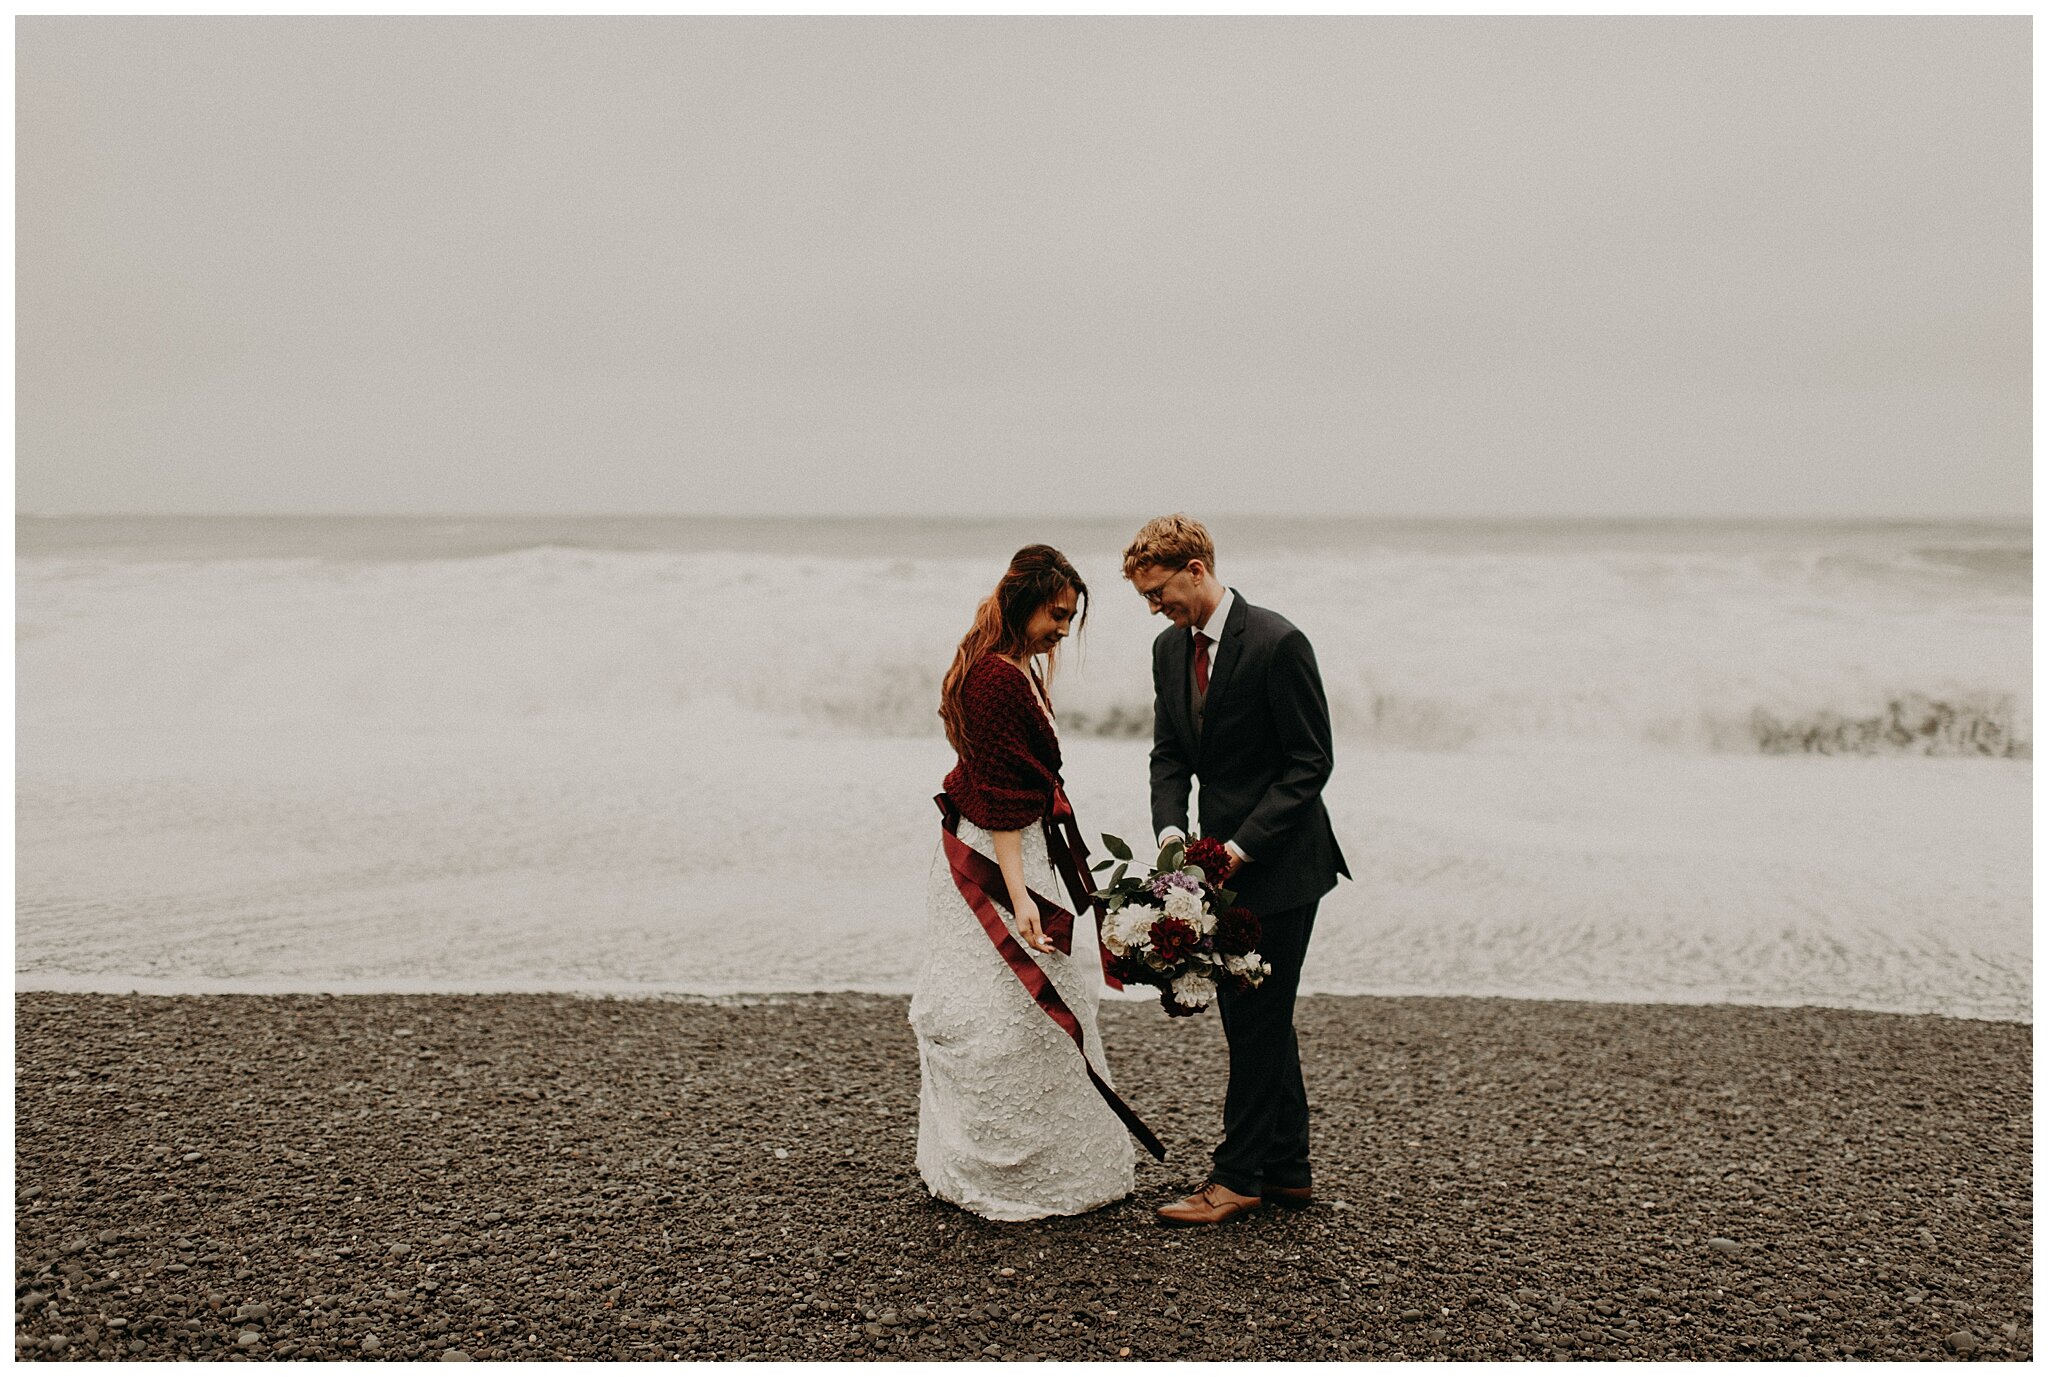 Amanda + David Wedding Portraits - Rialto Beach, Olympic National Park, Washington - Kamra Fuller Photography